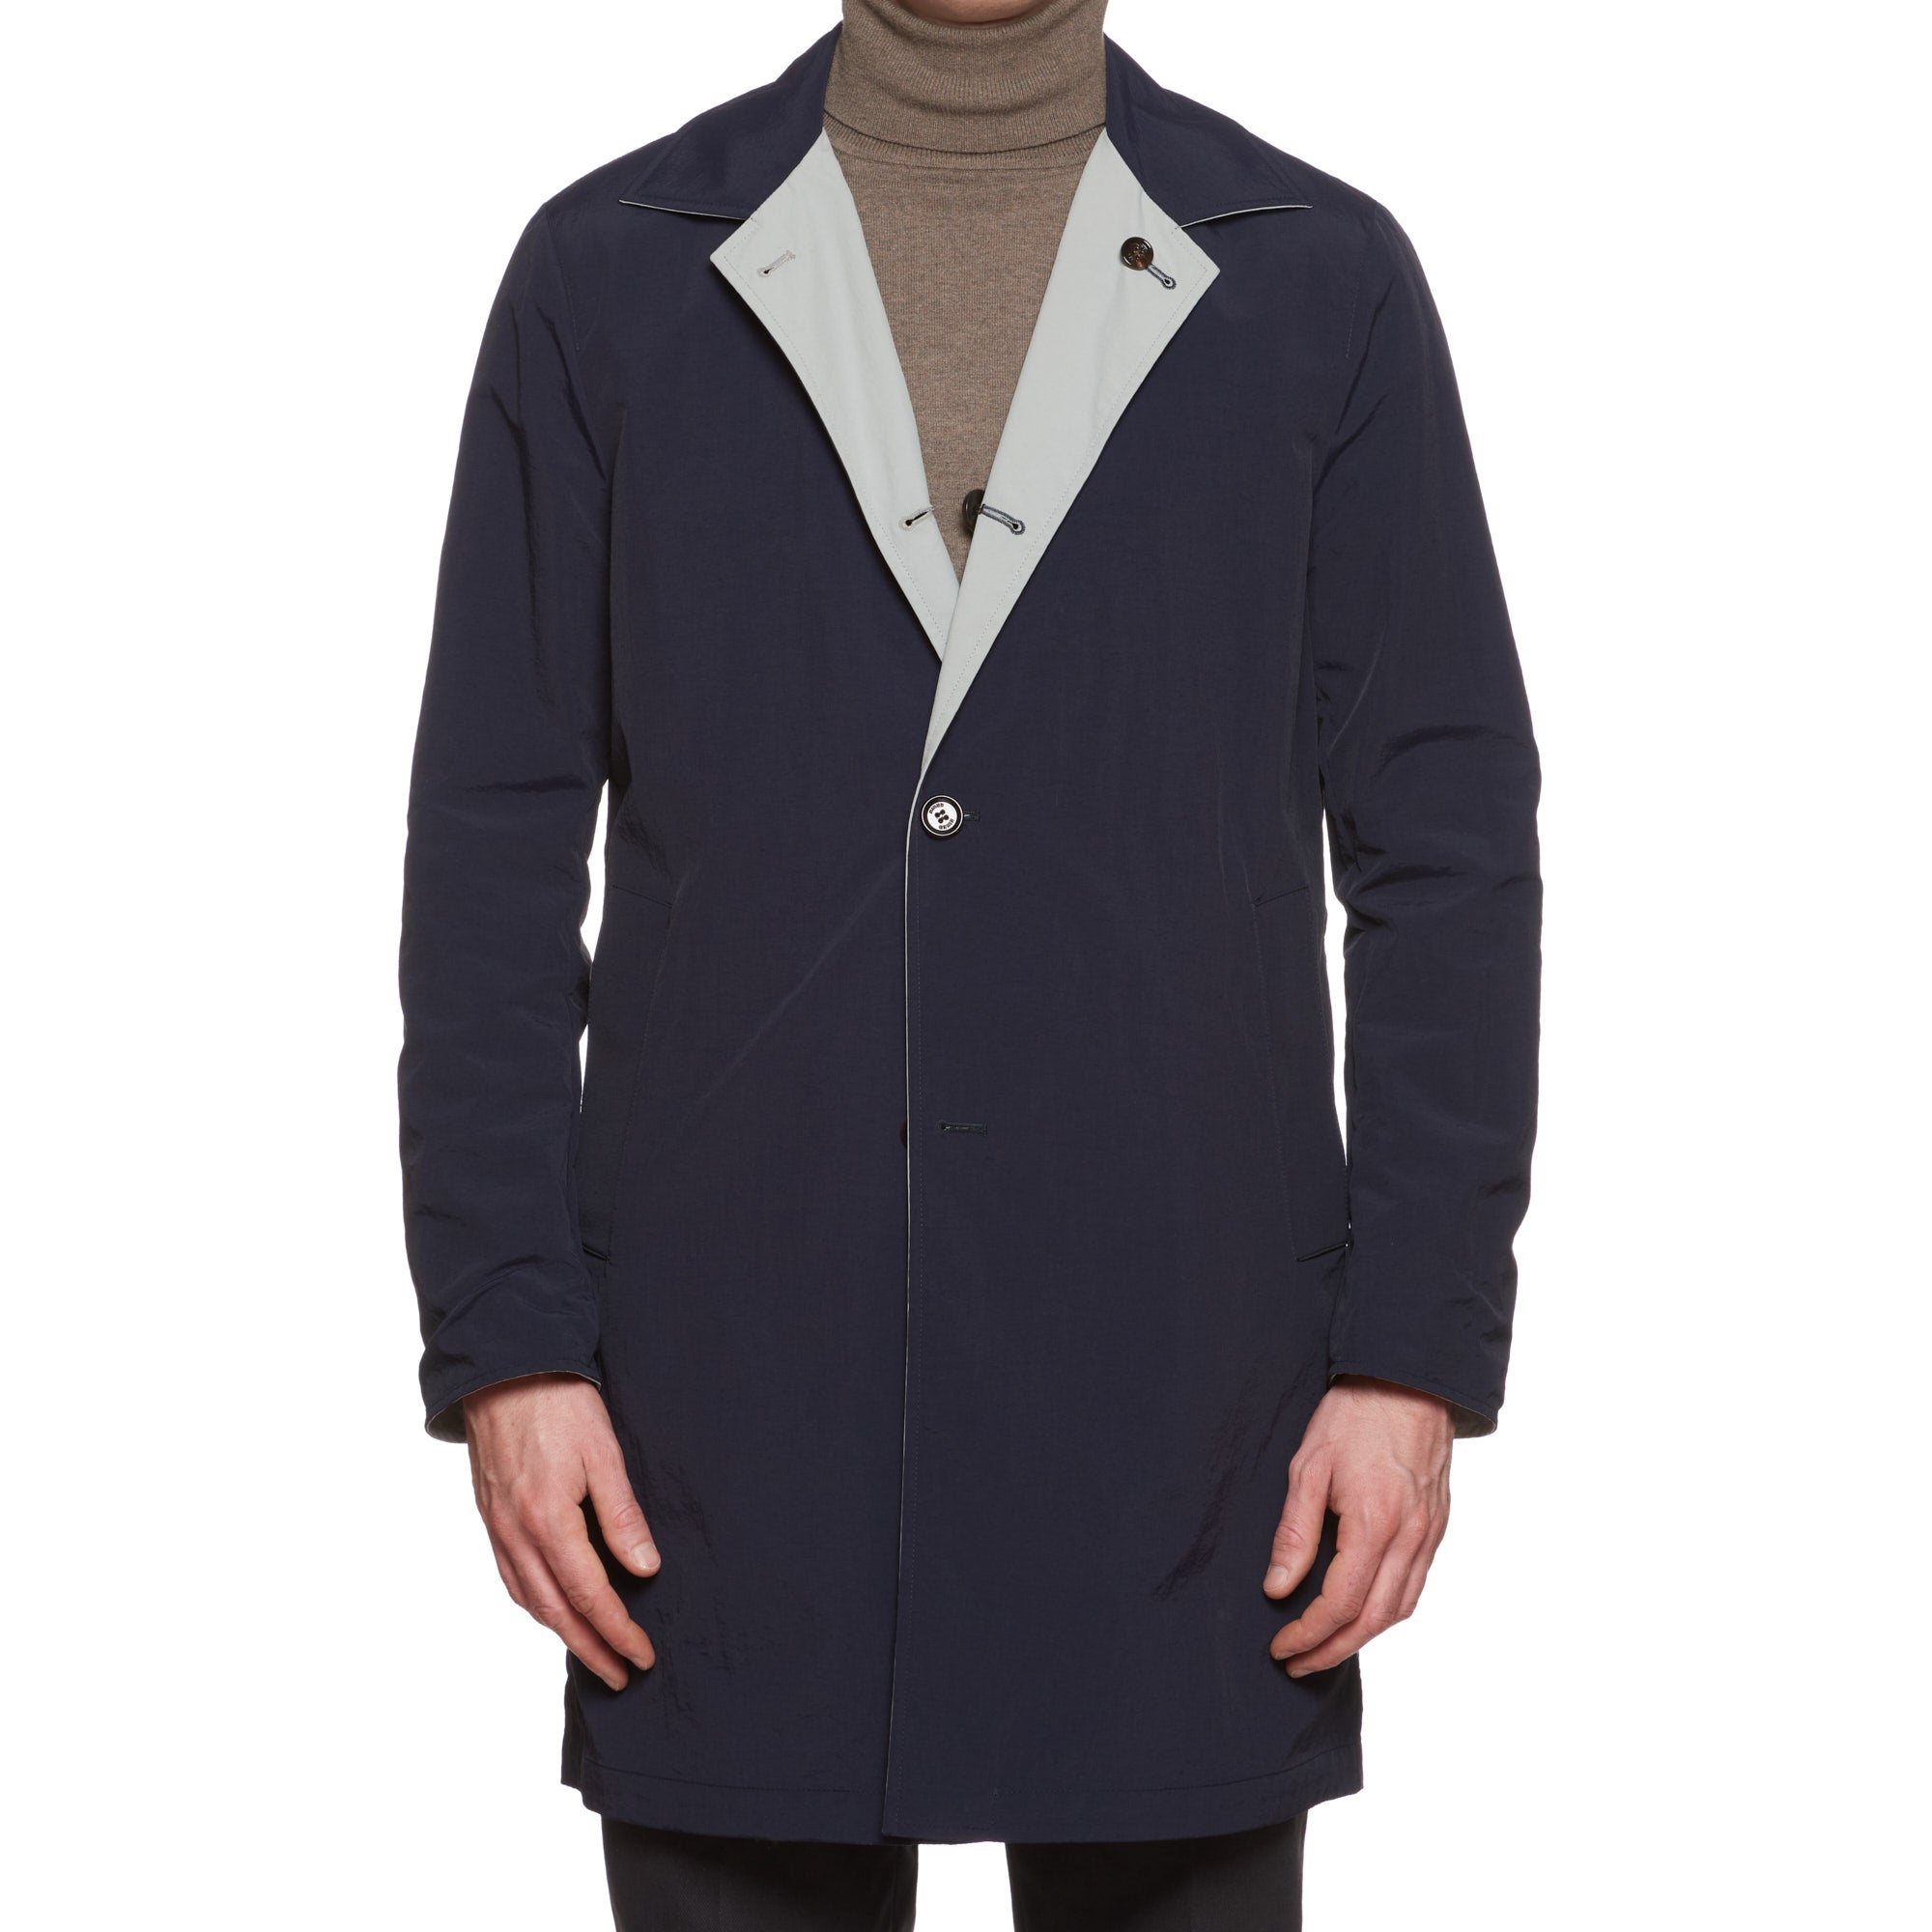 KITON KIRED "Ben" Navy Blue Light Gray Reversible Rain Jacket Coat EU 50 NEW US M